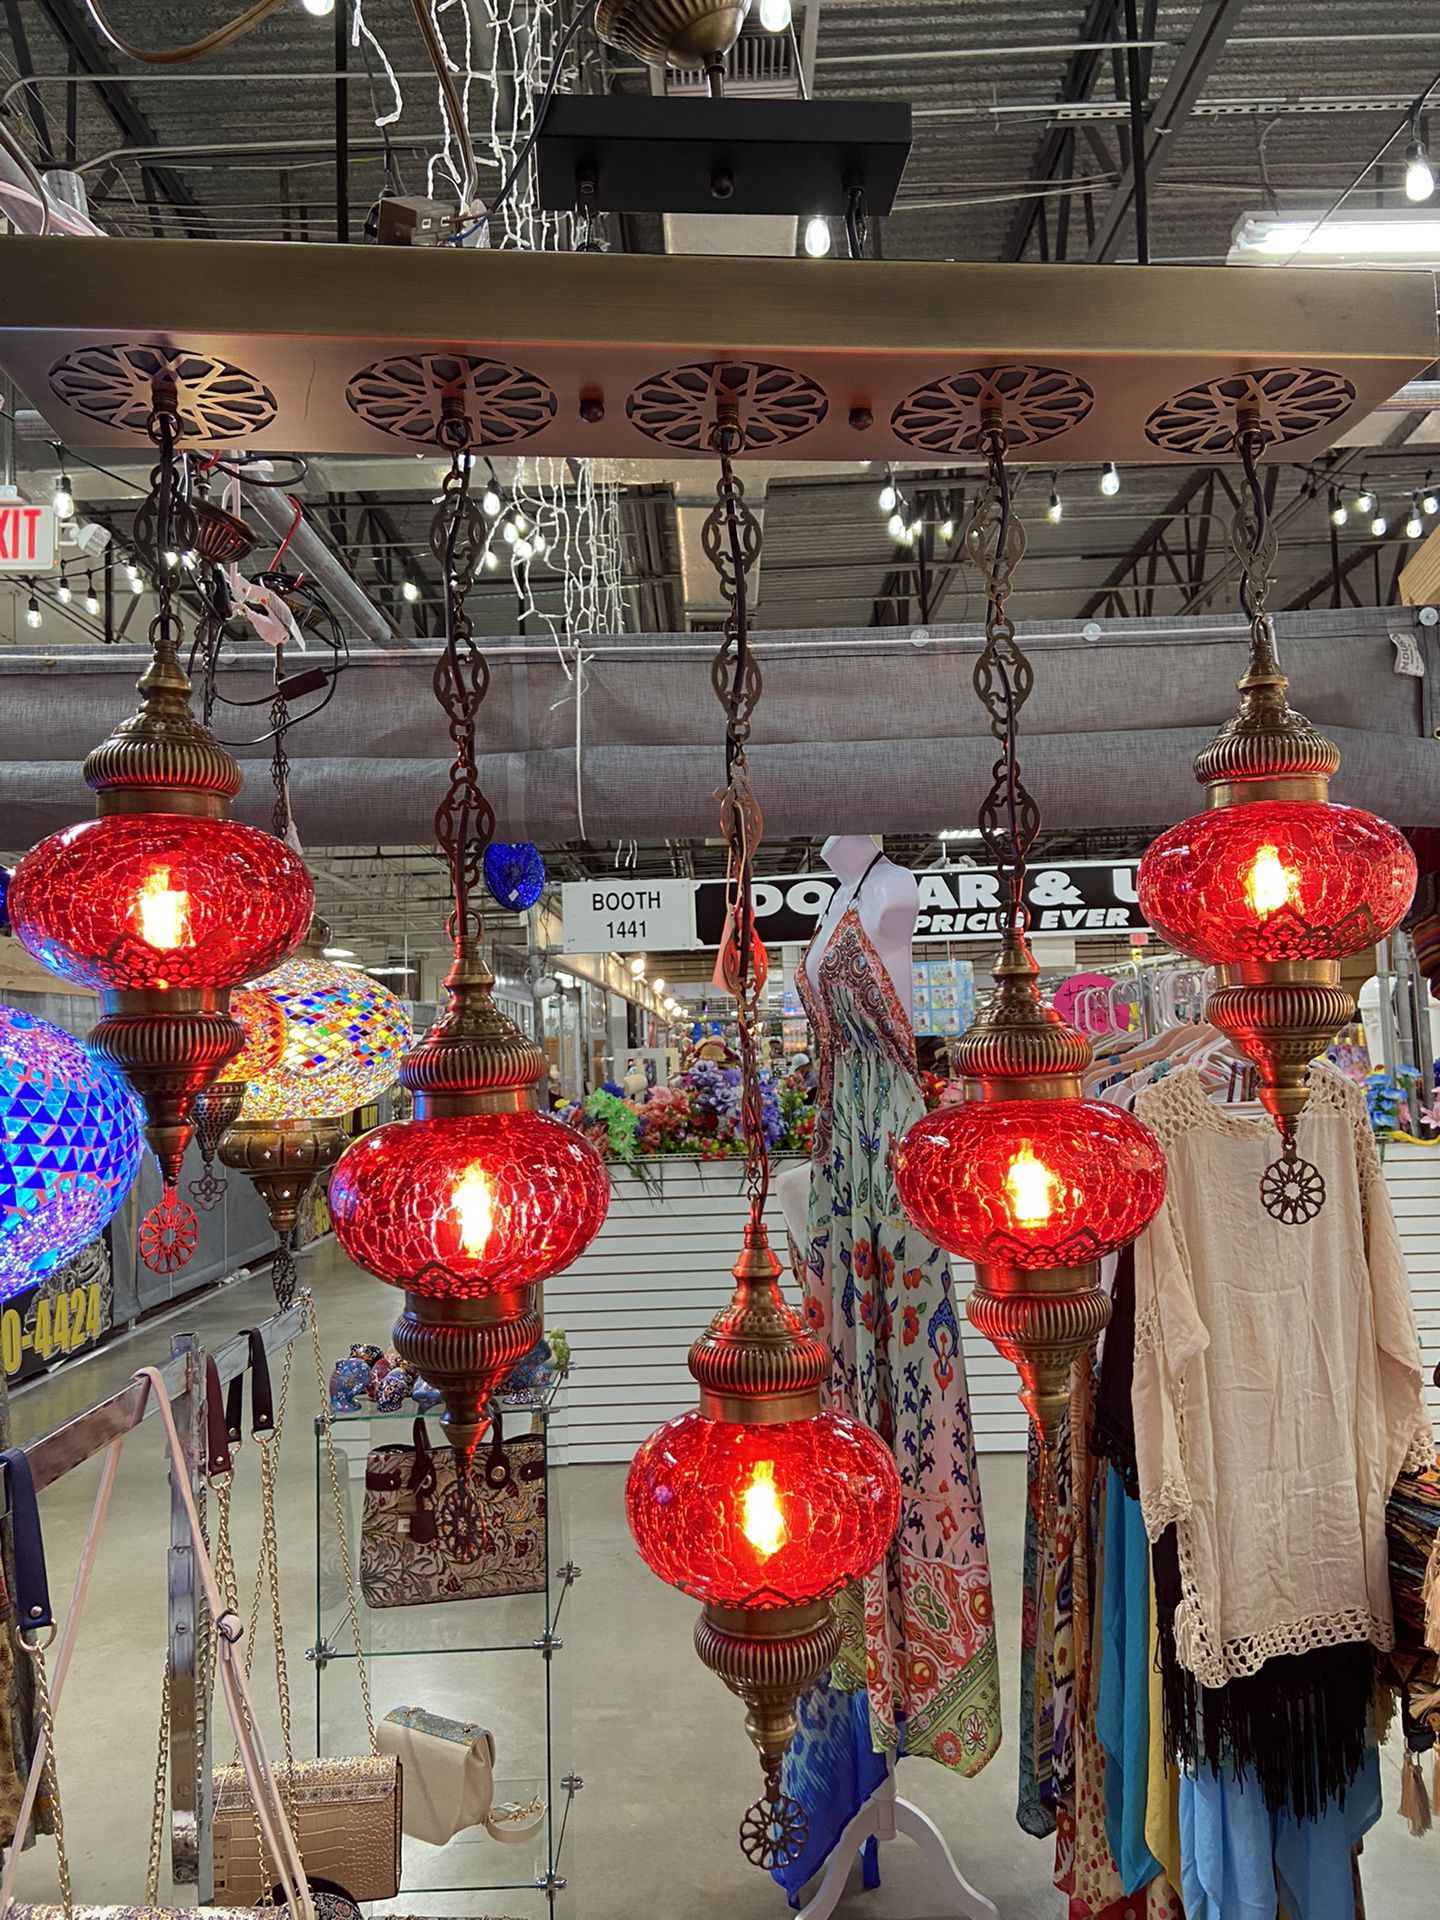 Turkish Ceiling Lamp 